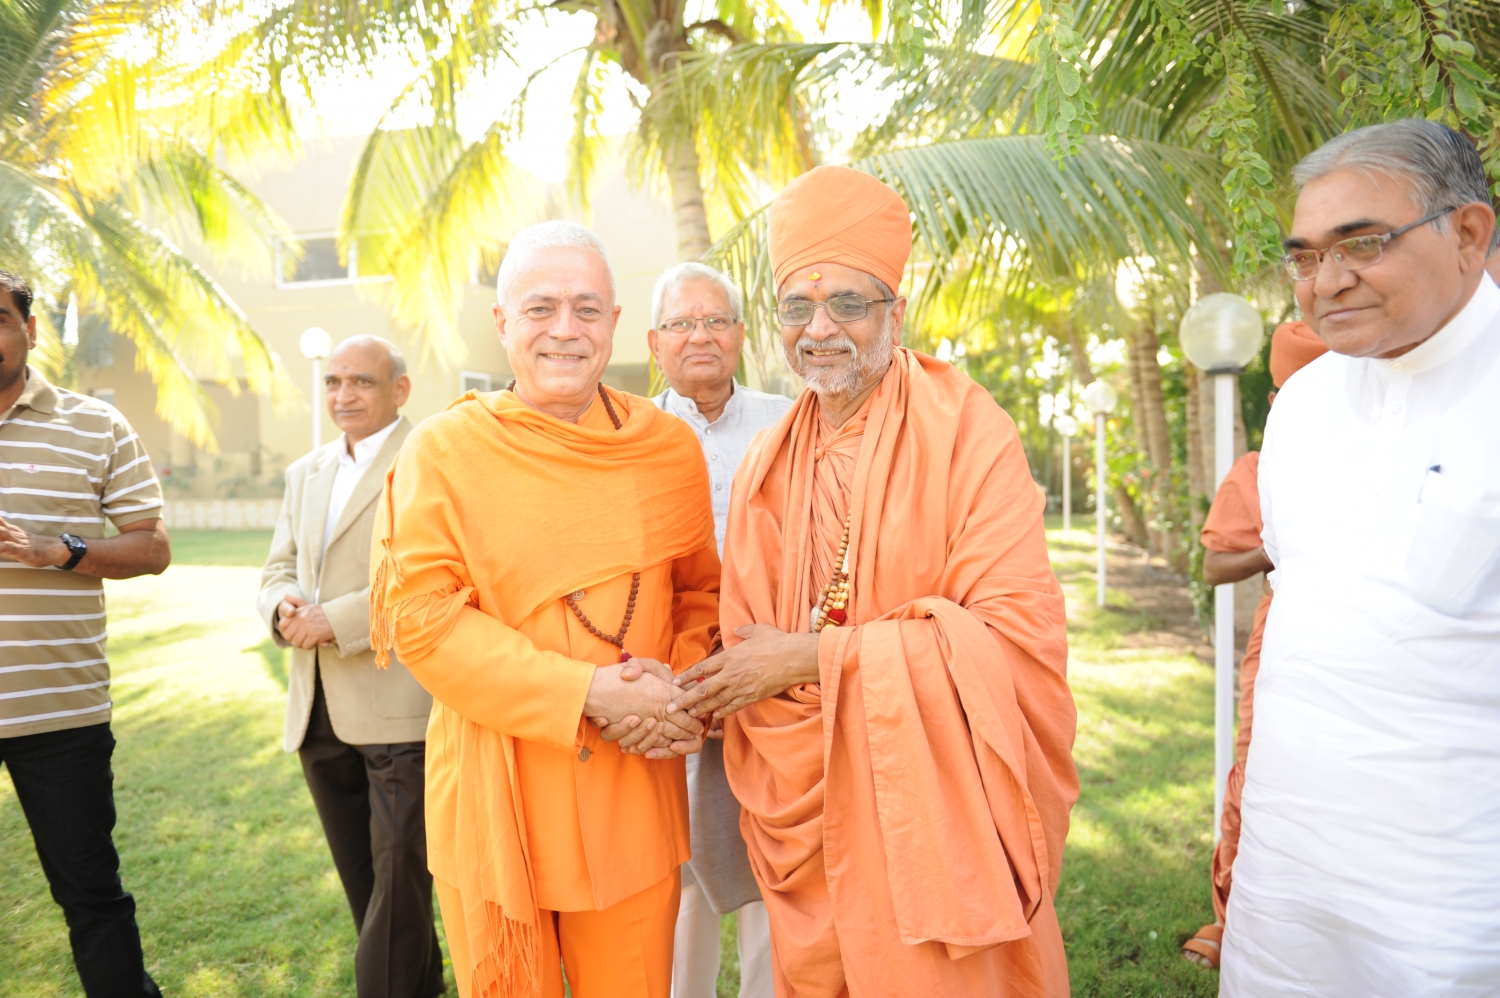 H.H. Jagat Guru Amrta Súryánanda Mahá Rája and H.H. Shastri Madhavapriyadas Jí, President of the Shrí Swami Narayan Gurukul Vishwavidya Pratishthanam